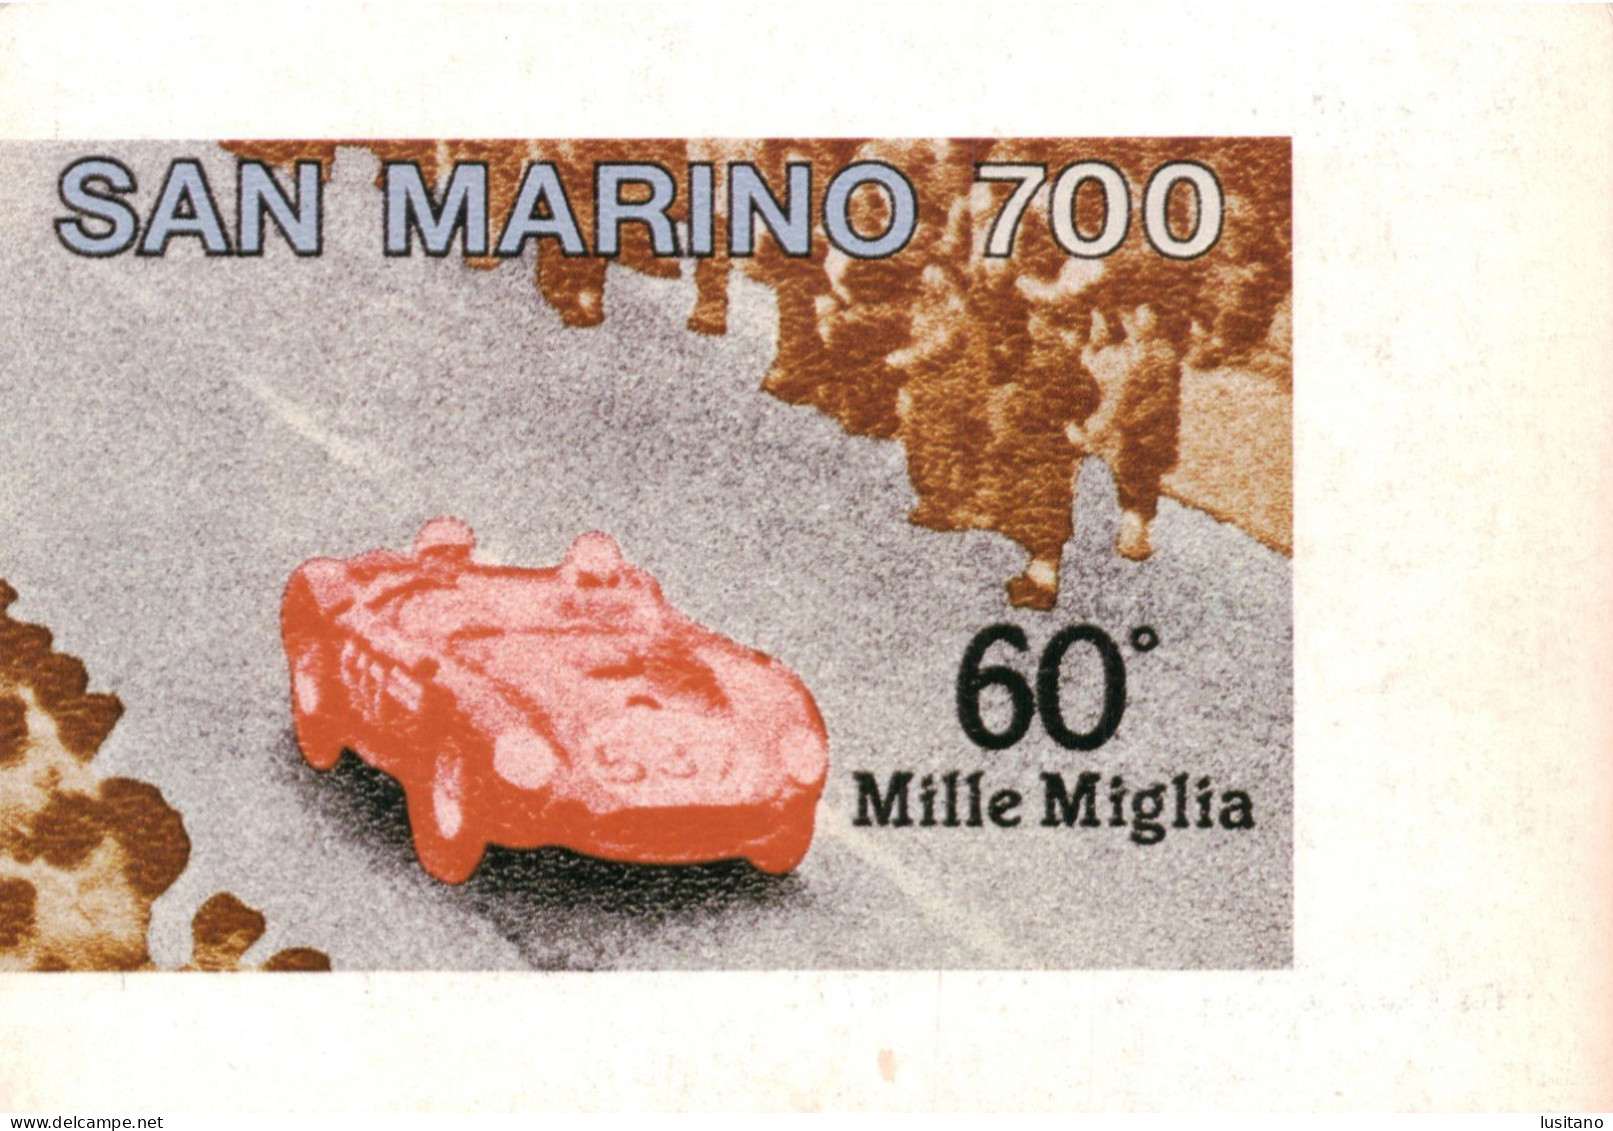 San Marino, 60º Mille Miglia, 1987, Race Racing Rally Car Motorsports Motorsports Card Nº0771 (1000) - Rally